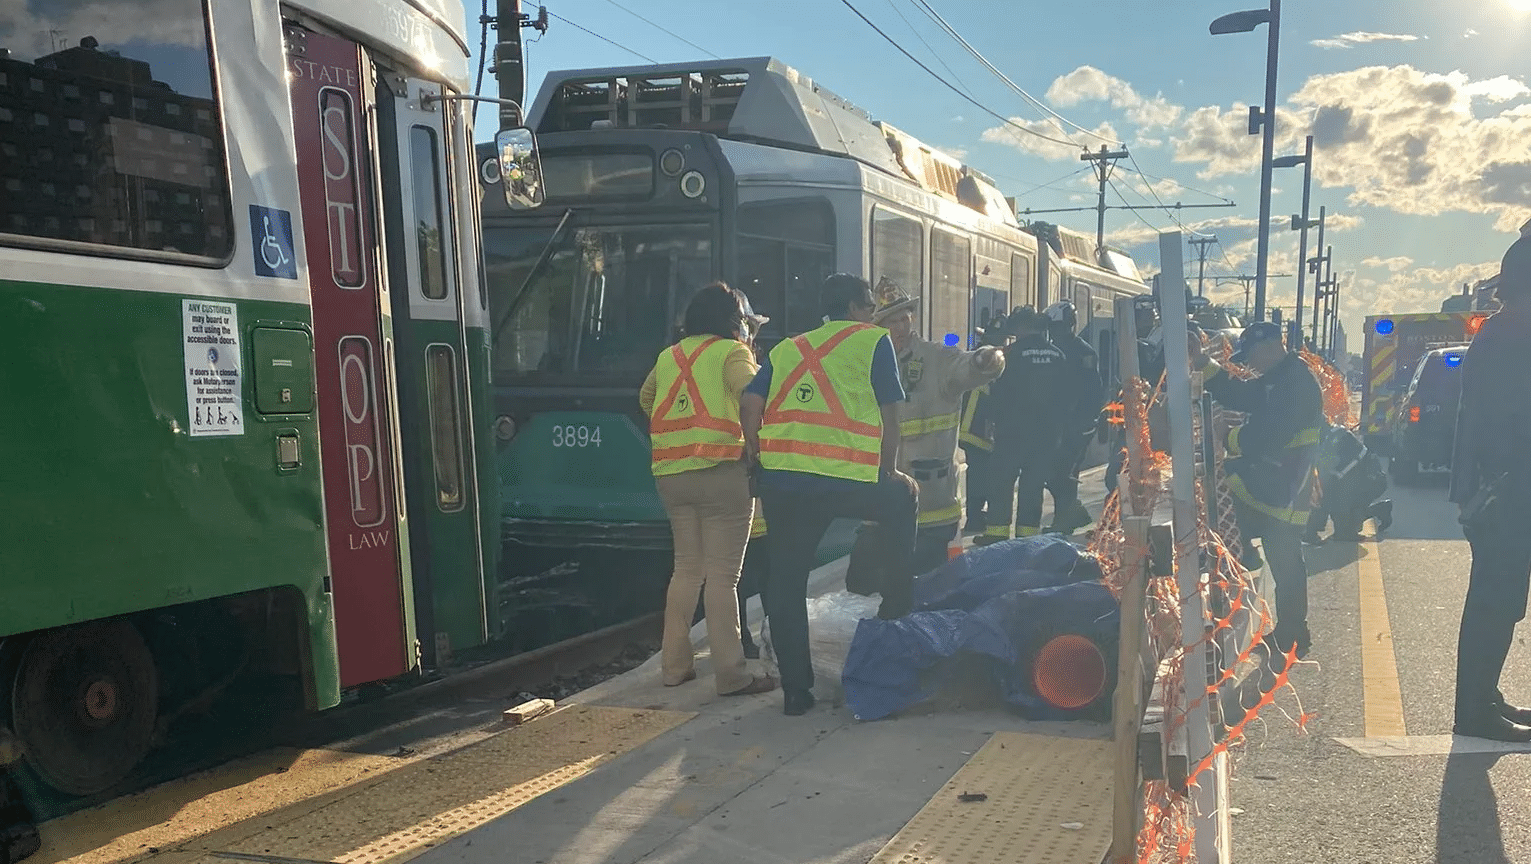 Transit trains in Boston collide leaving more than 20 injured